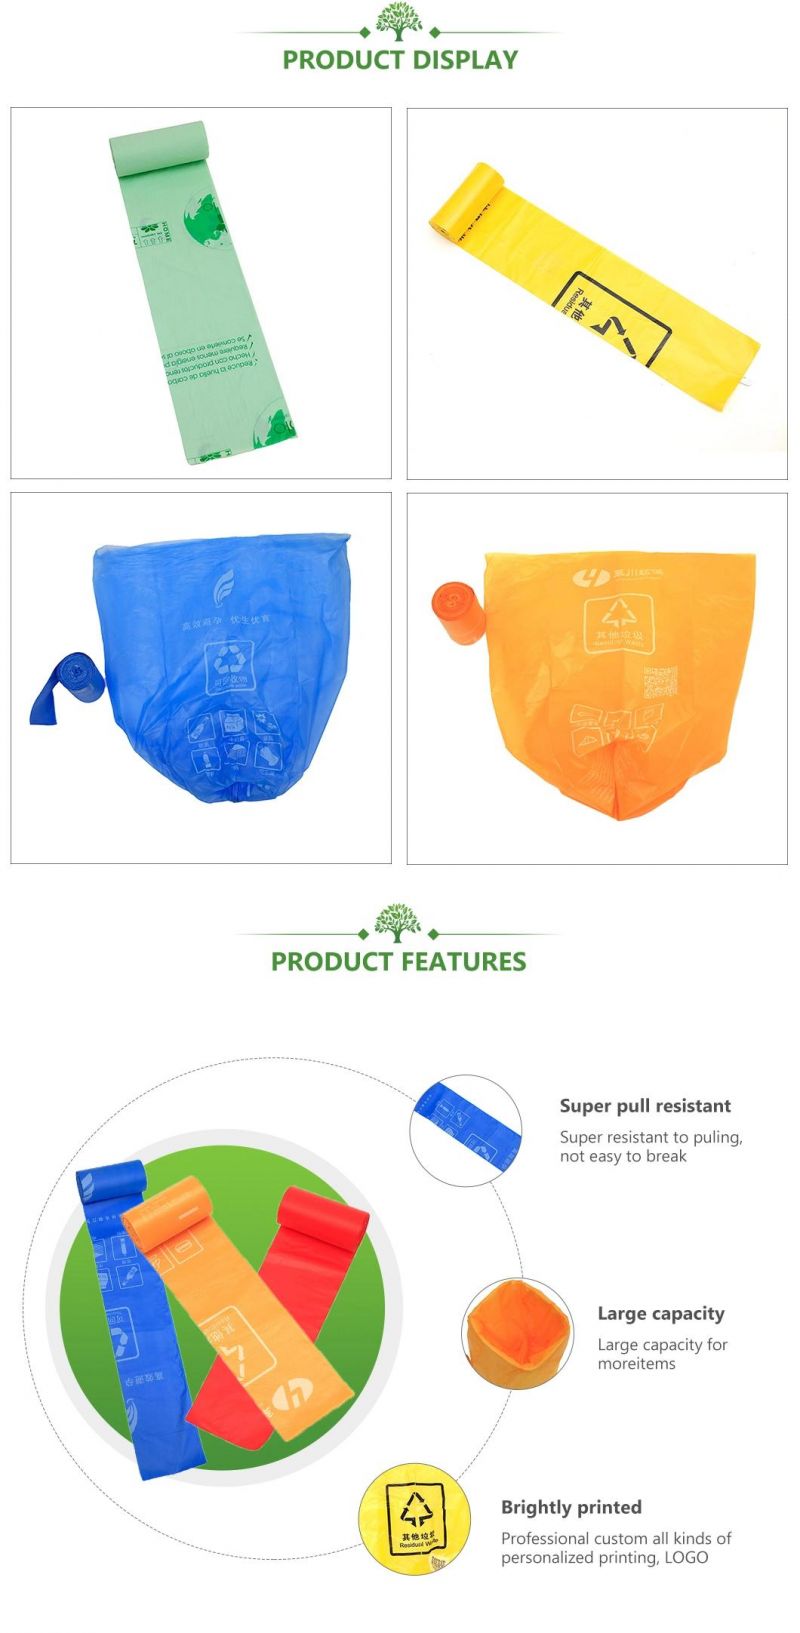 Biodegradable Plastic HDPE Big Construction Garbage Bag